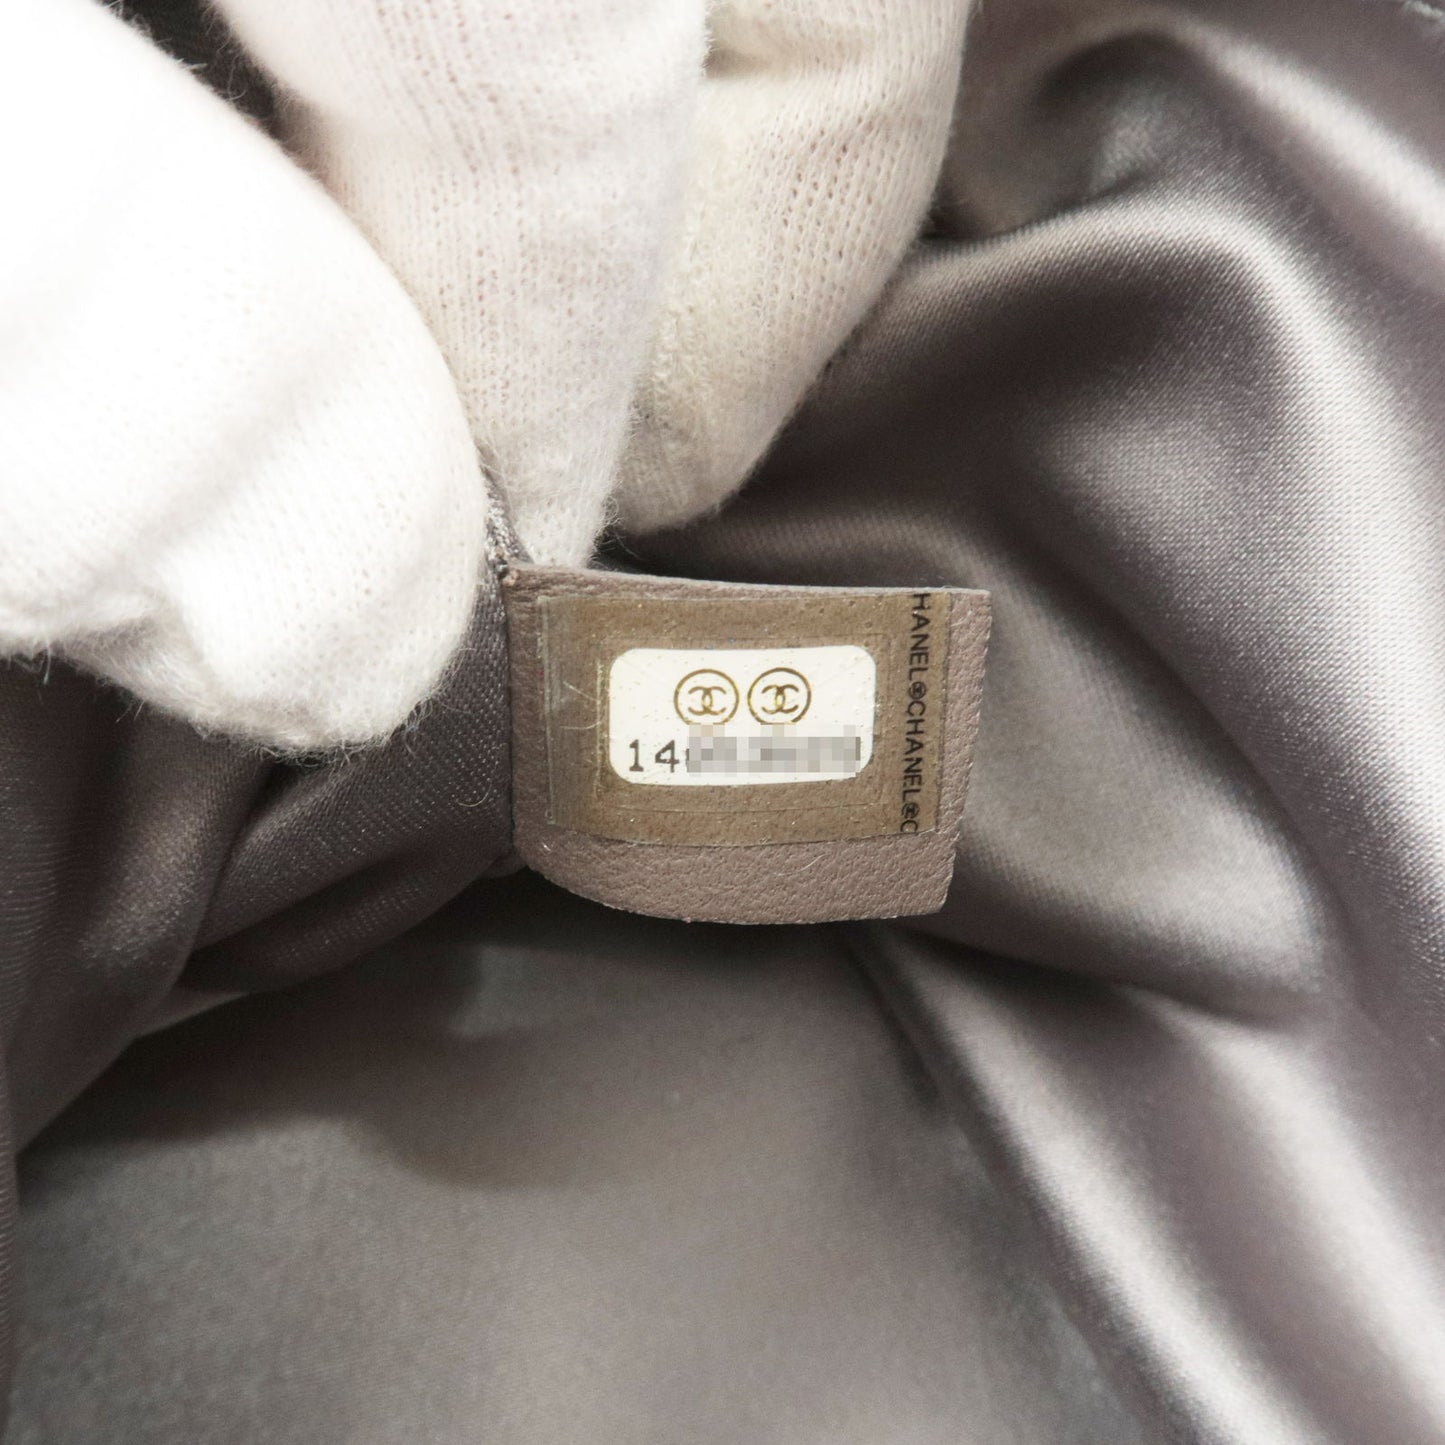 CHANEL Lamb Skin Tweed Chain Hand Bag Black Silver Hardware A49560